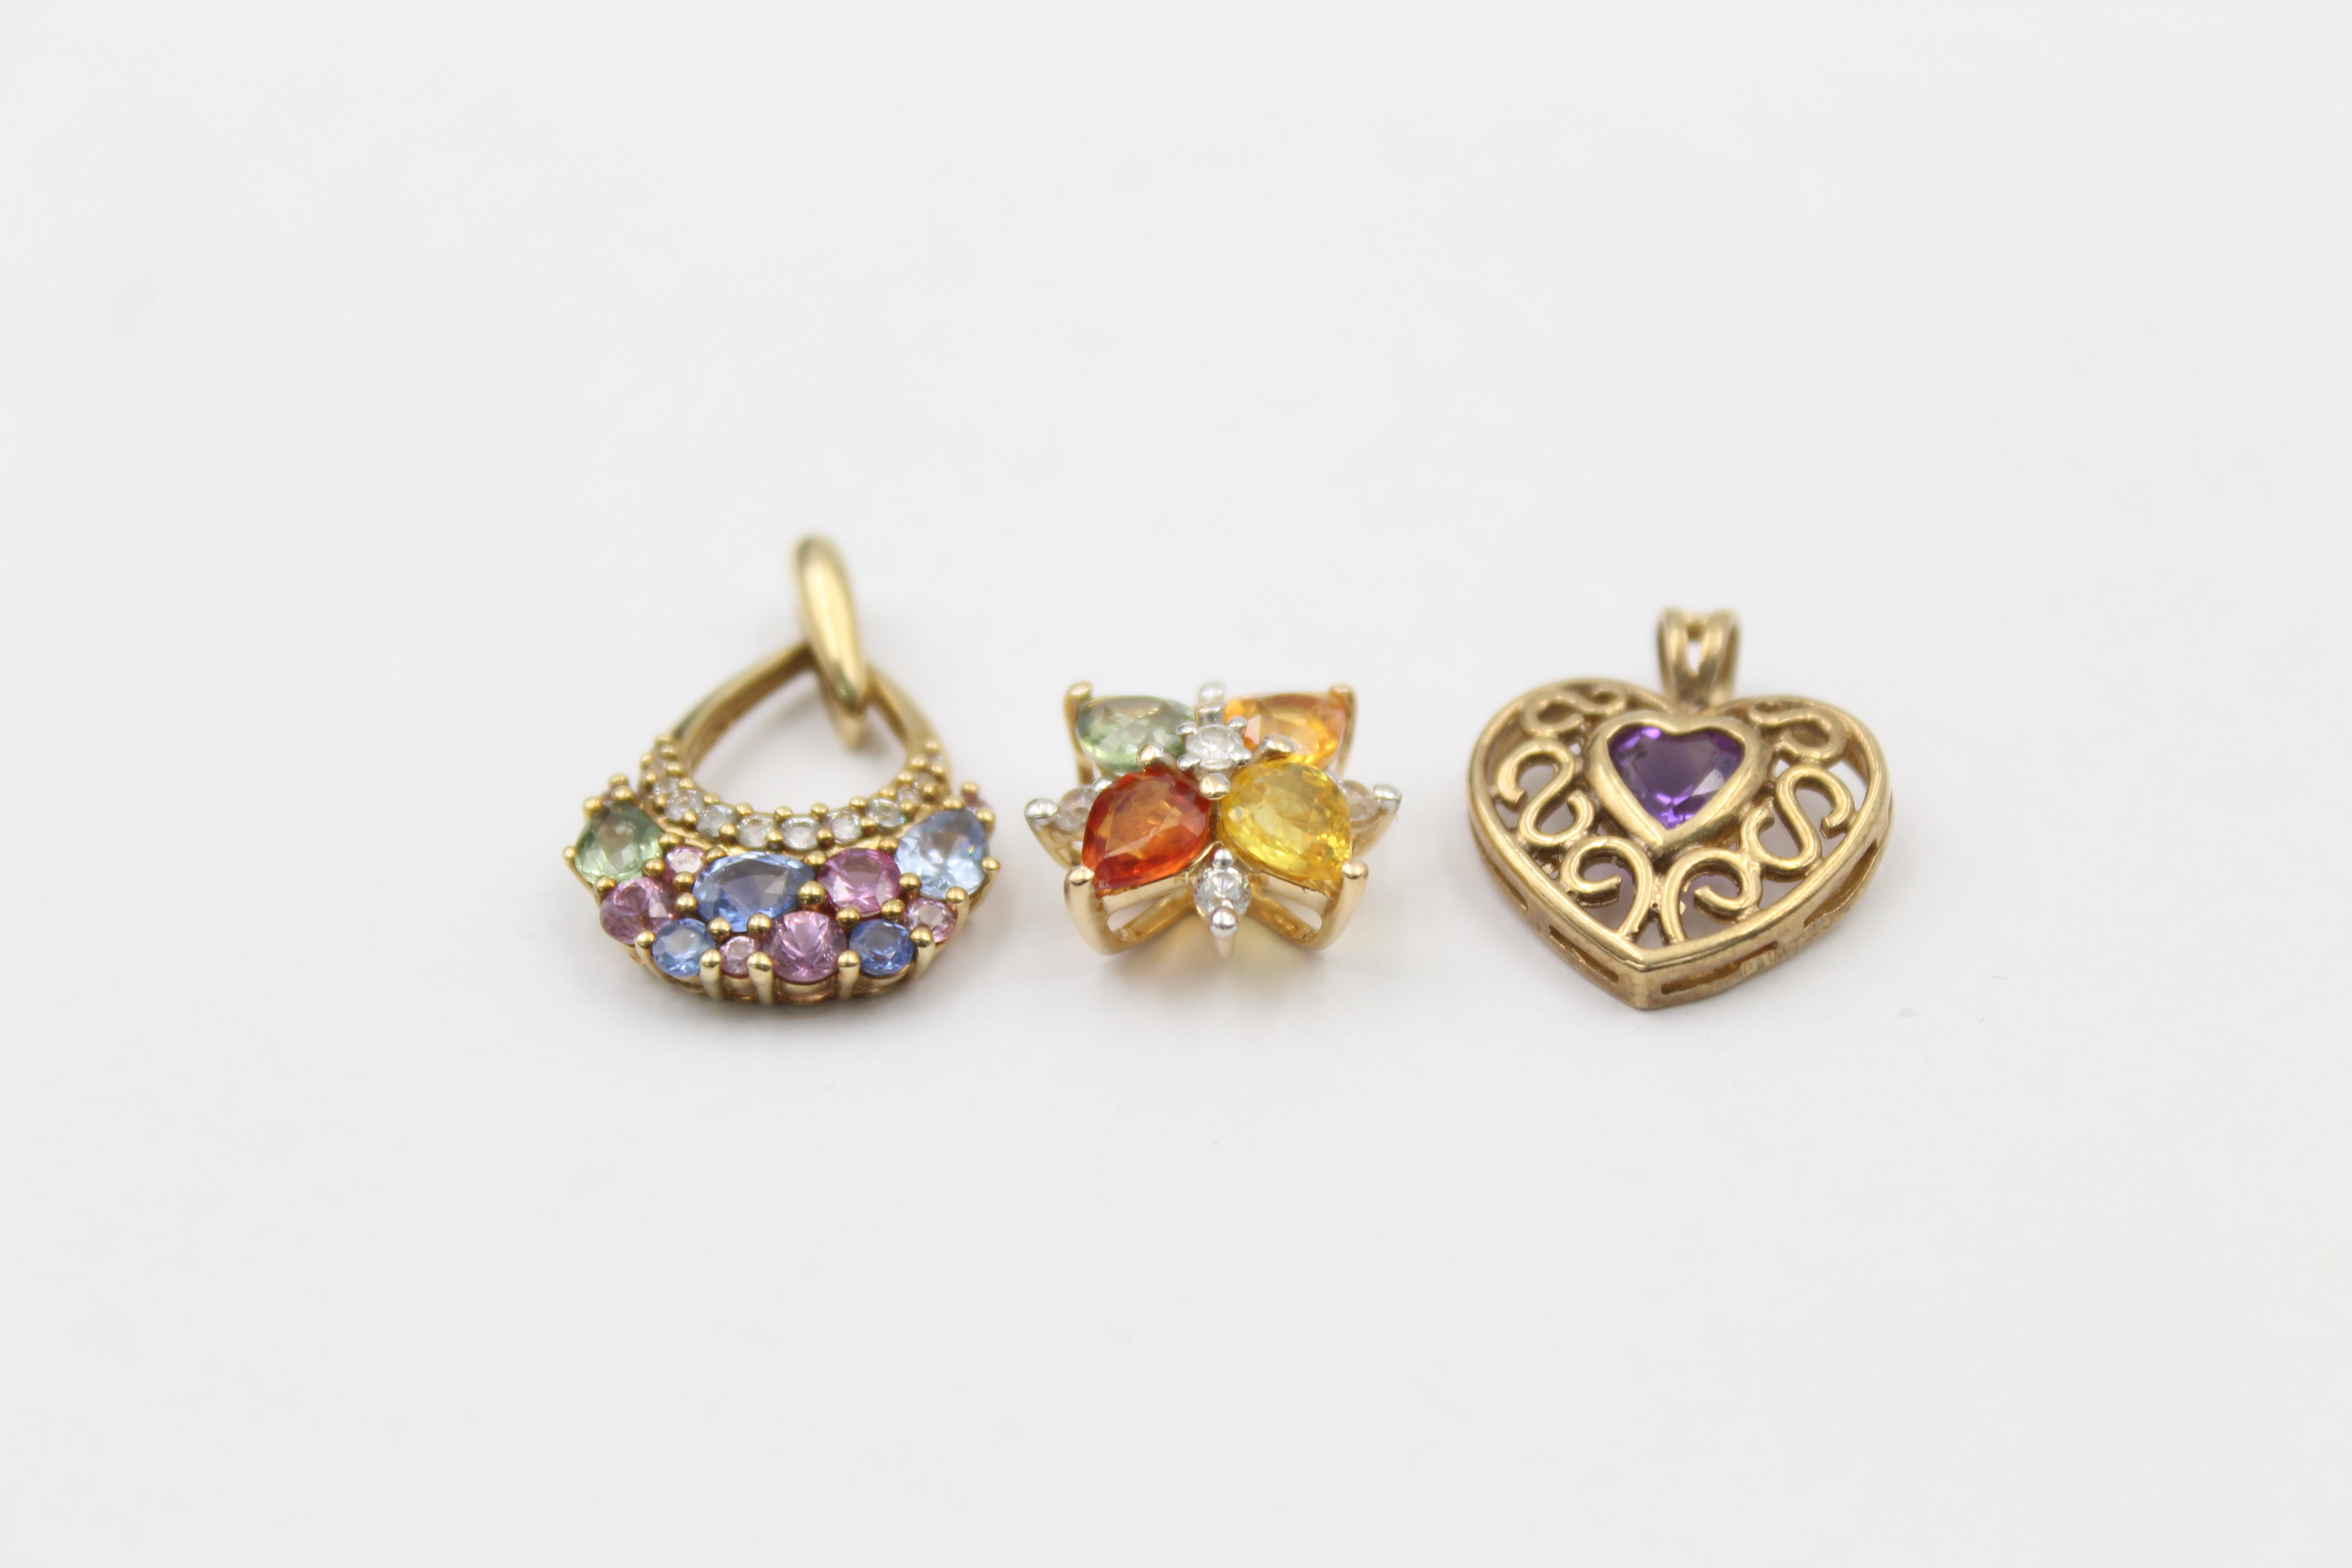 3 x 9ct gold openwork gemstone pendants inc. amethyst & vari-hue sapphire (4.5g)